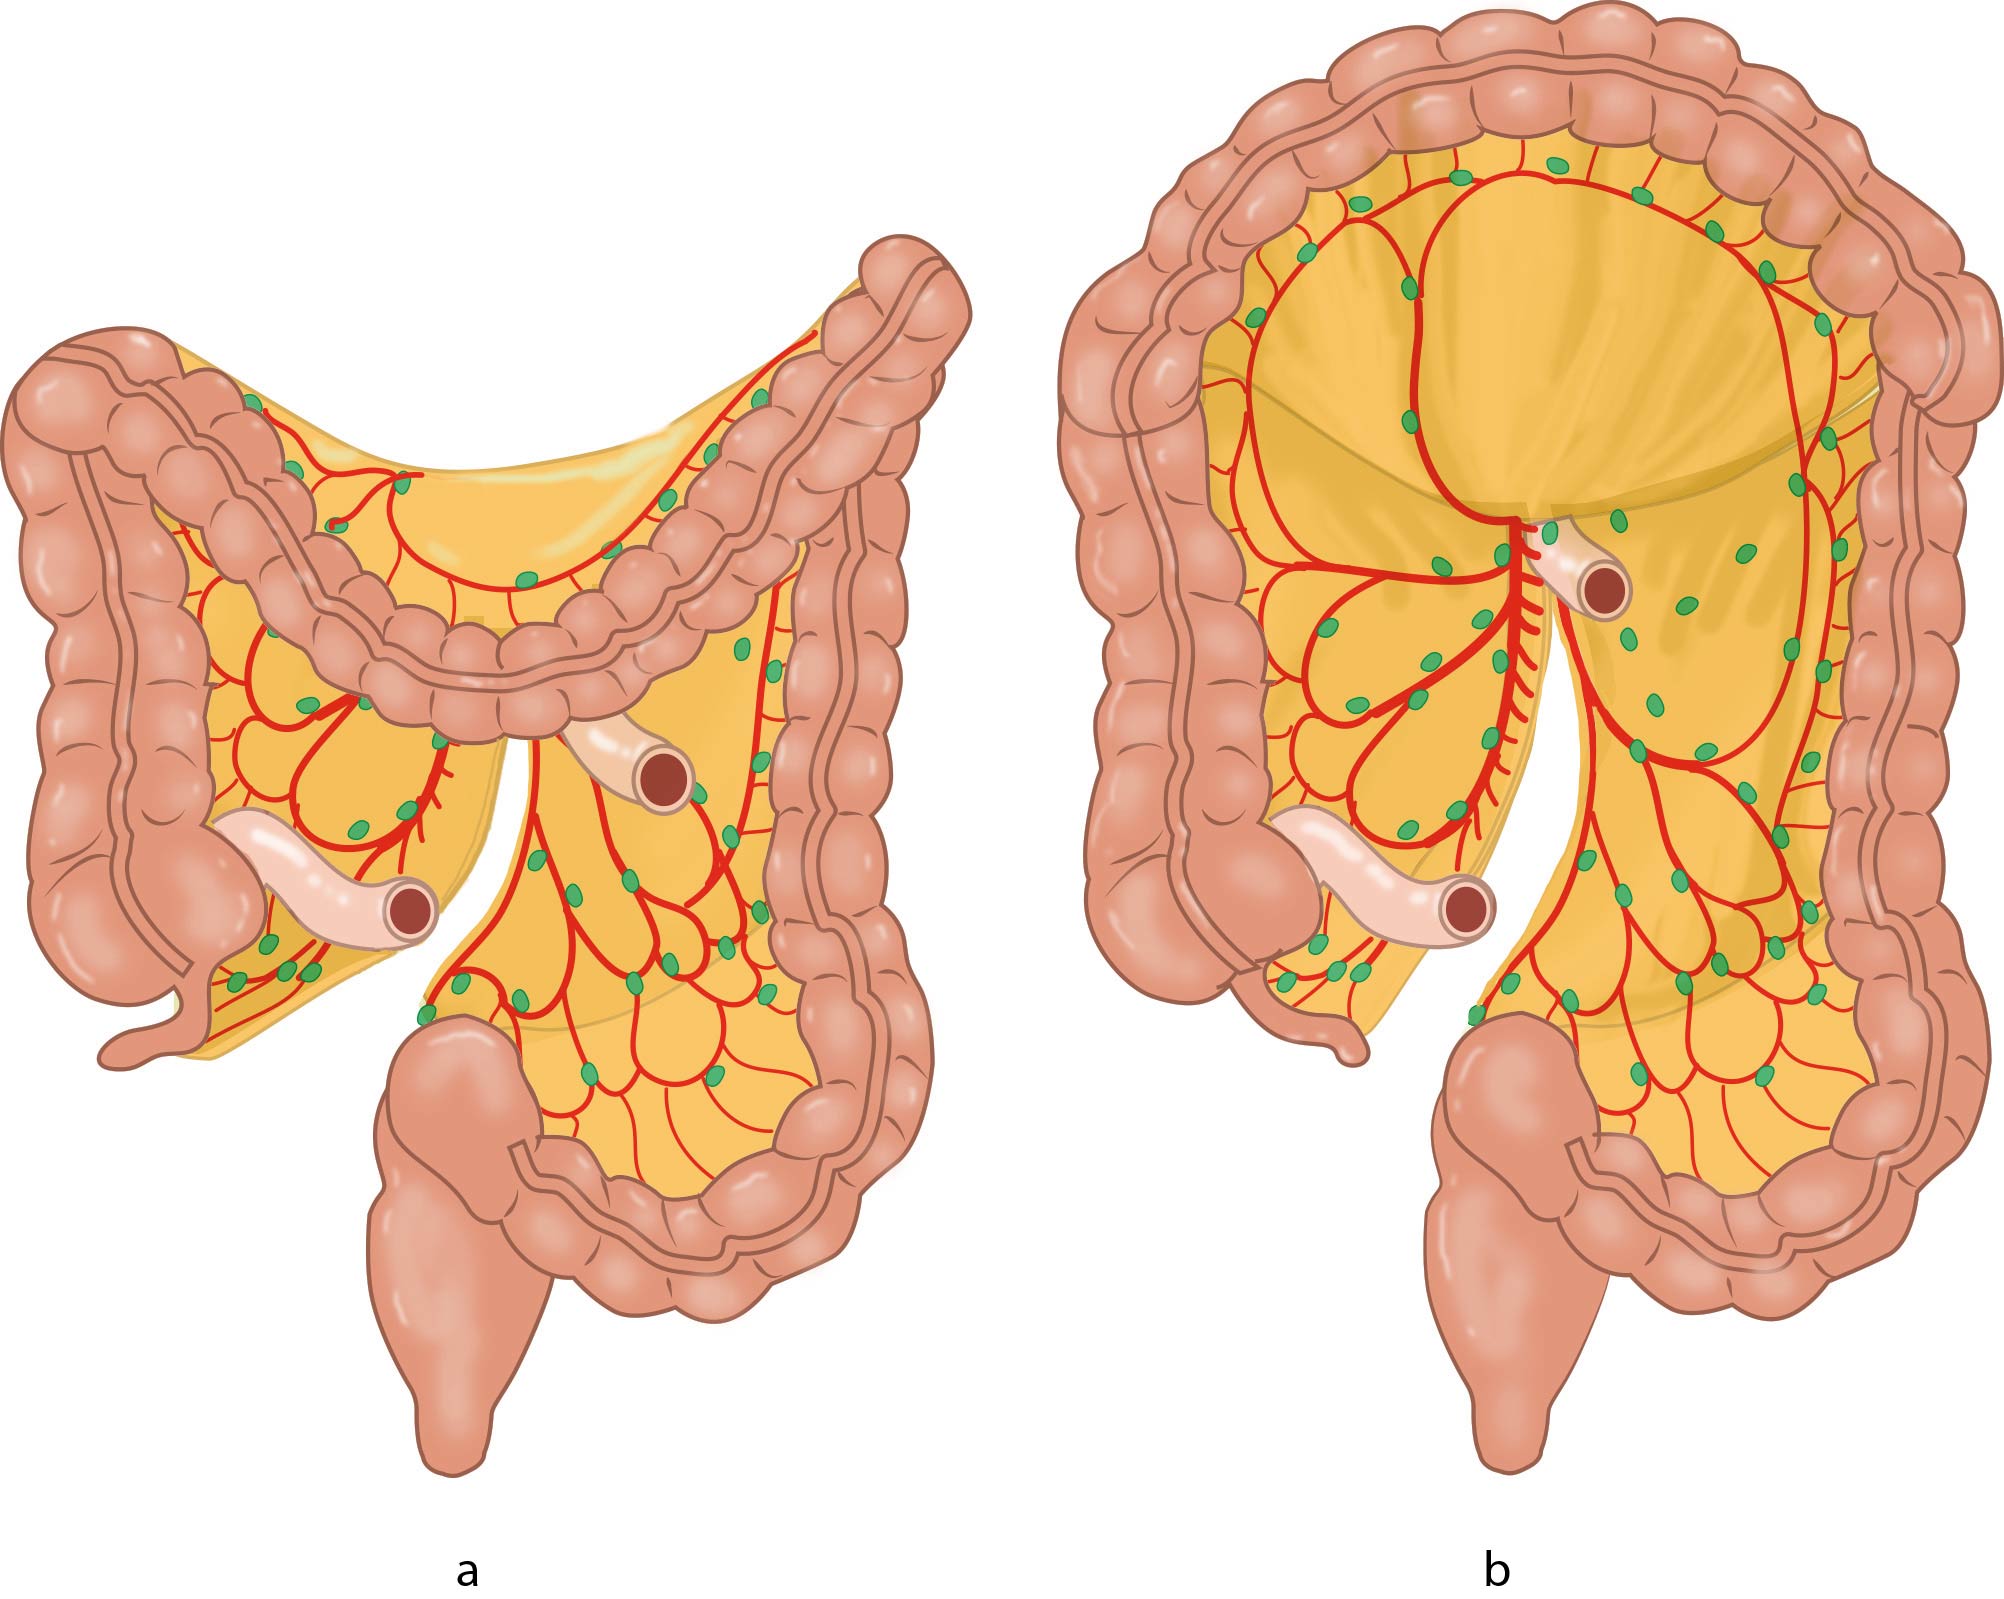 Large intestine with mesocolon